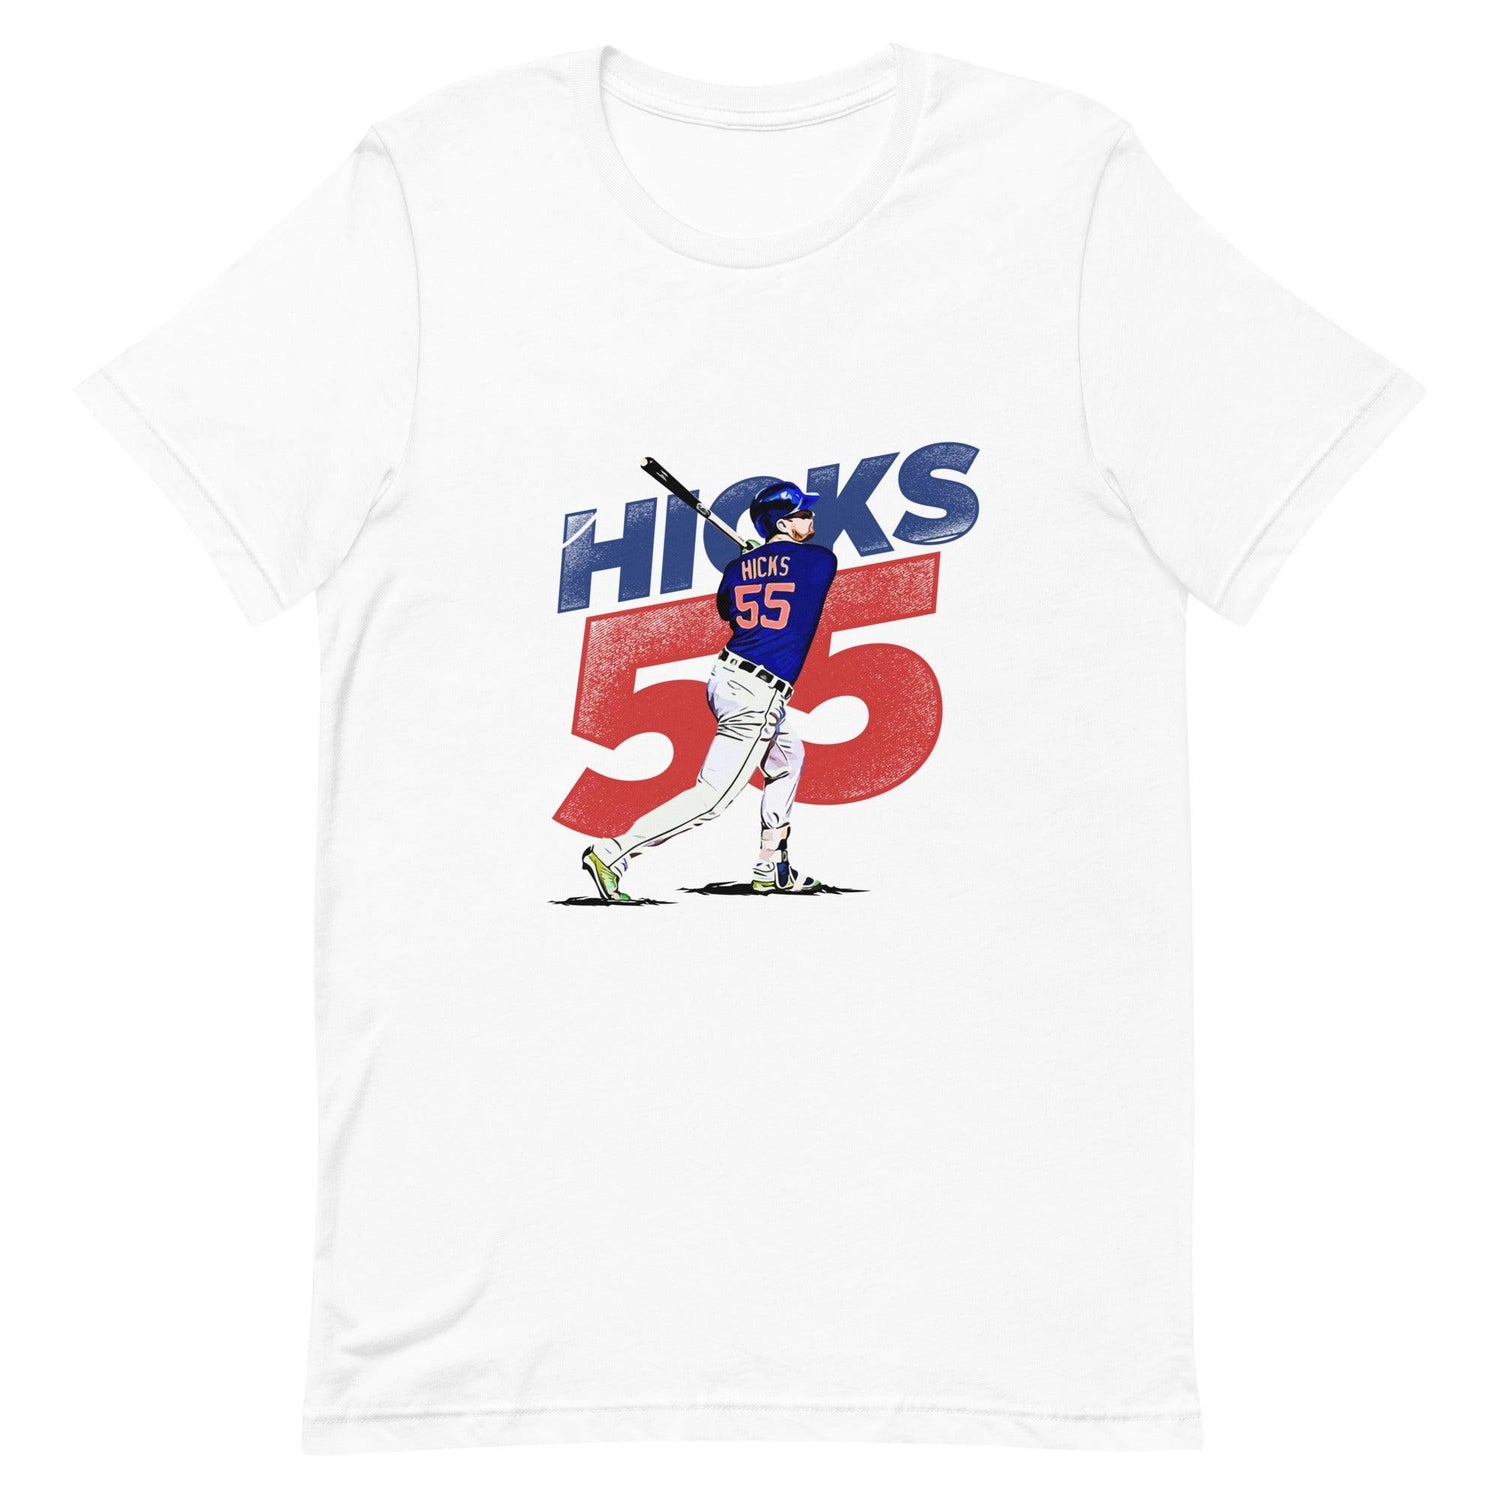 John Hicks "Gameday" t-shirt - Fan Arch